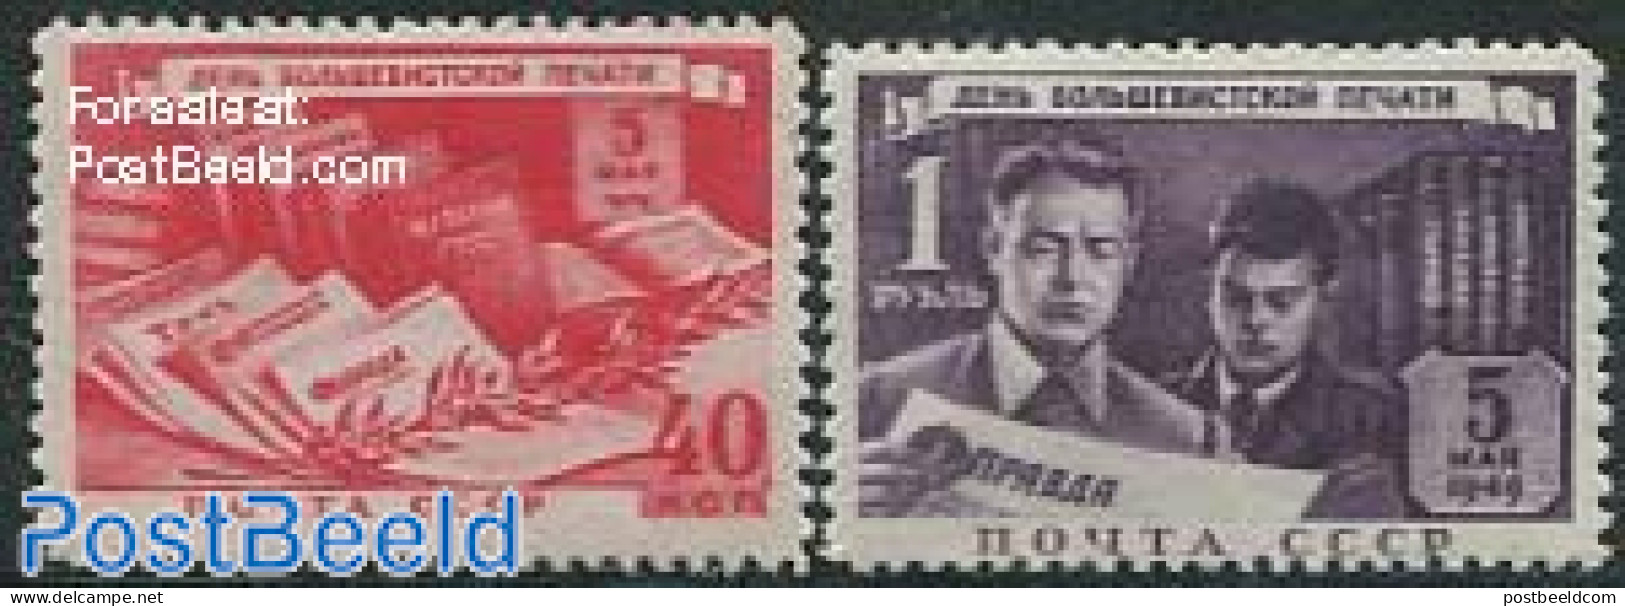 Russia, Soviet Union 1949 Press Day 2v, Mint NH, History - Newspapers & Journalism - Ongebruikt